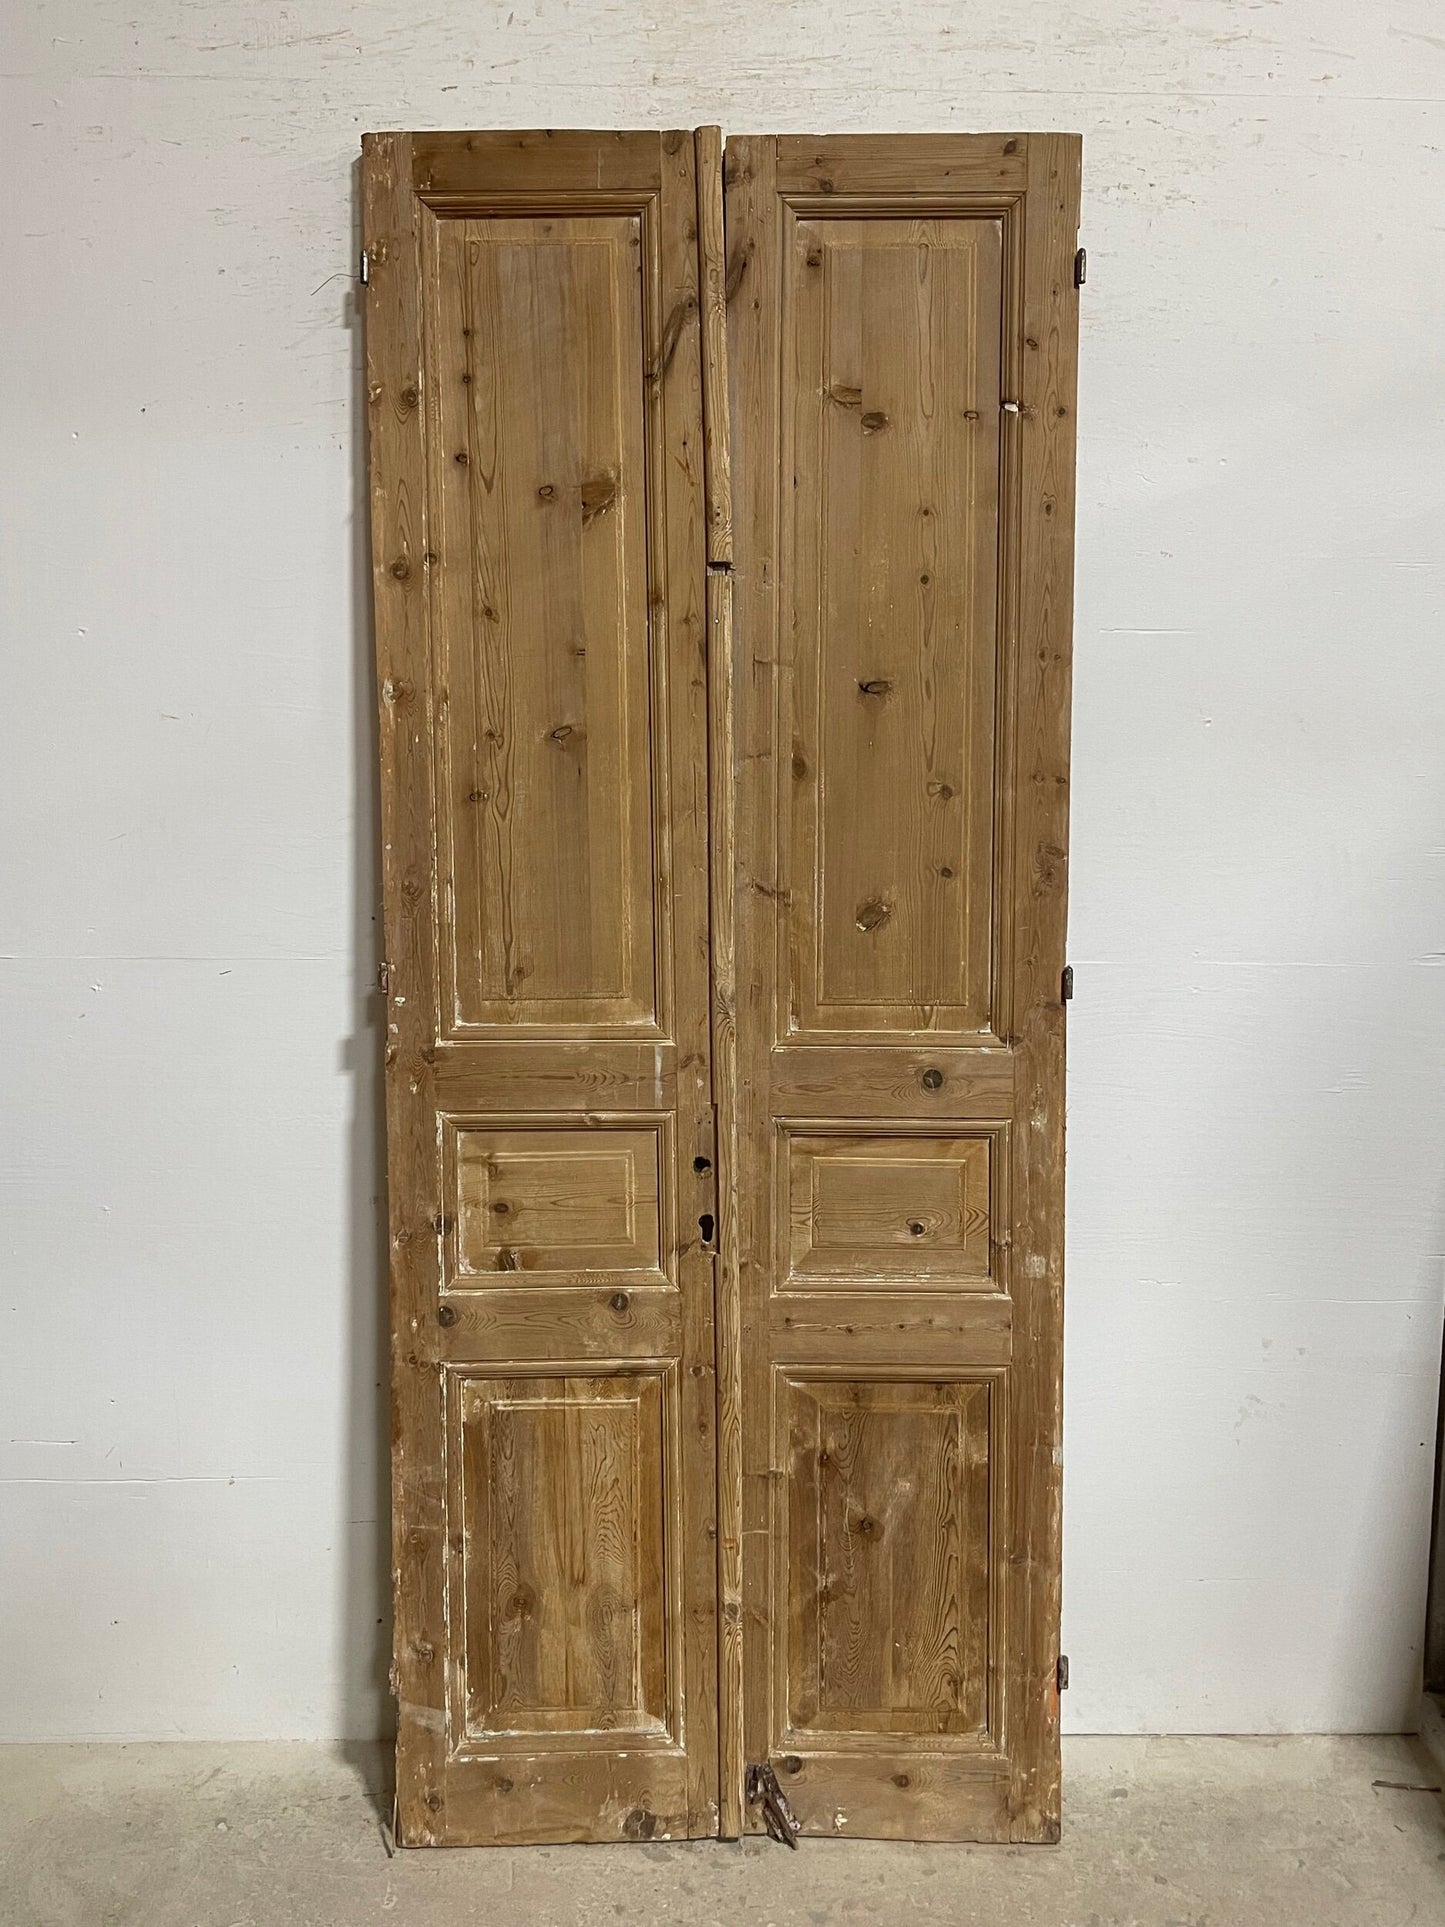 Antique french panel doors (93 x 37.5) I102